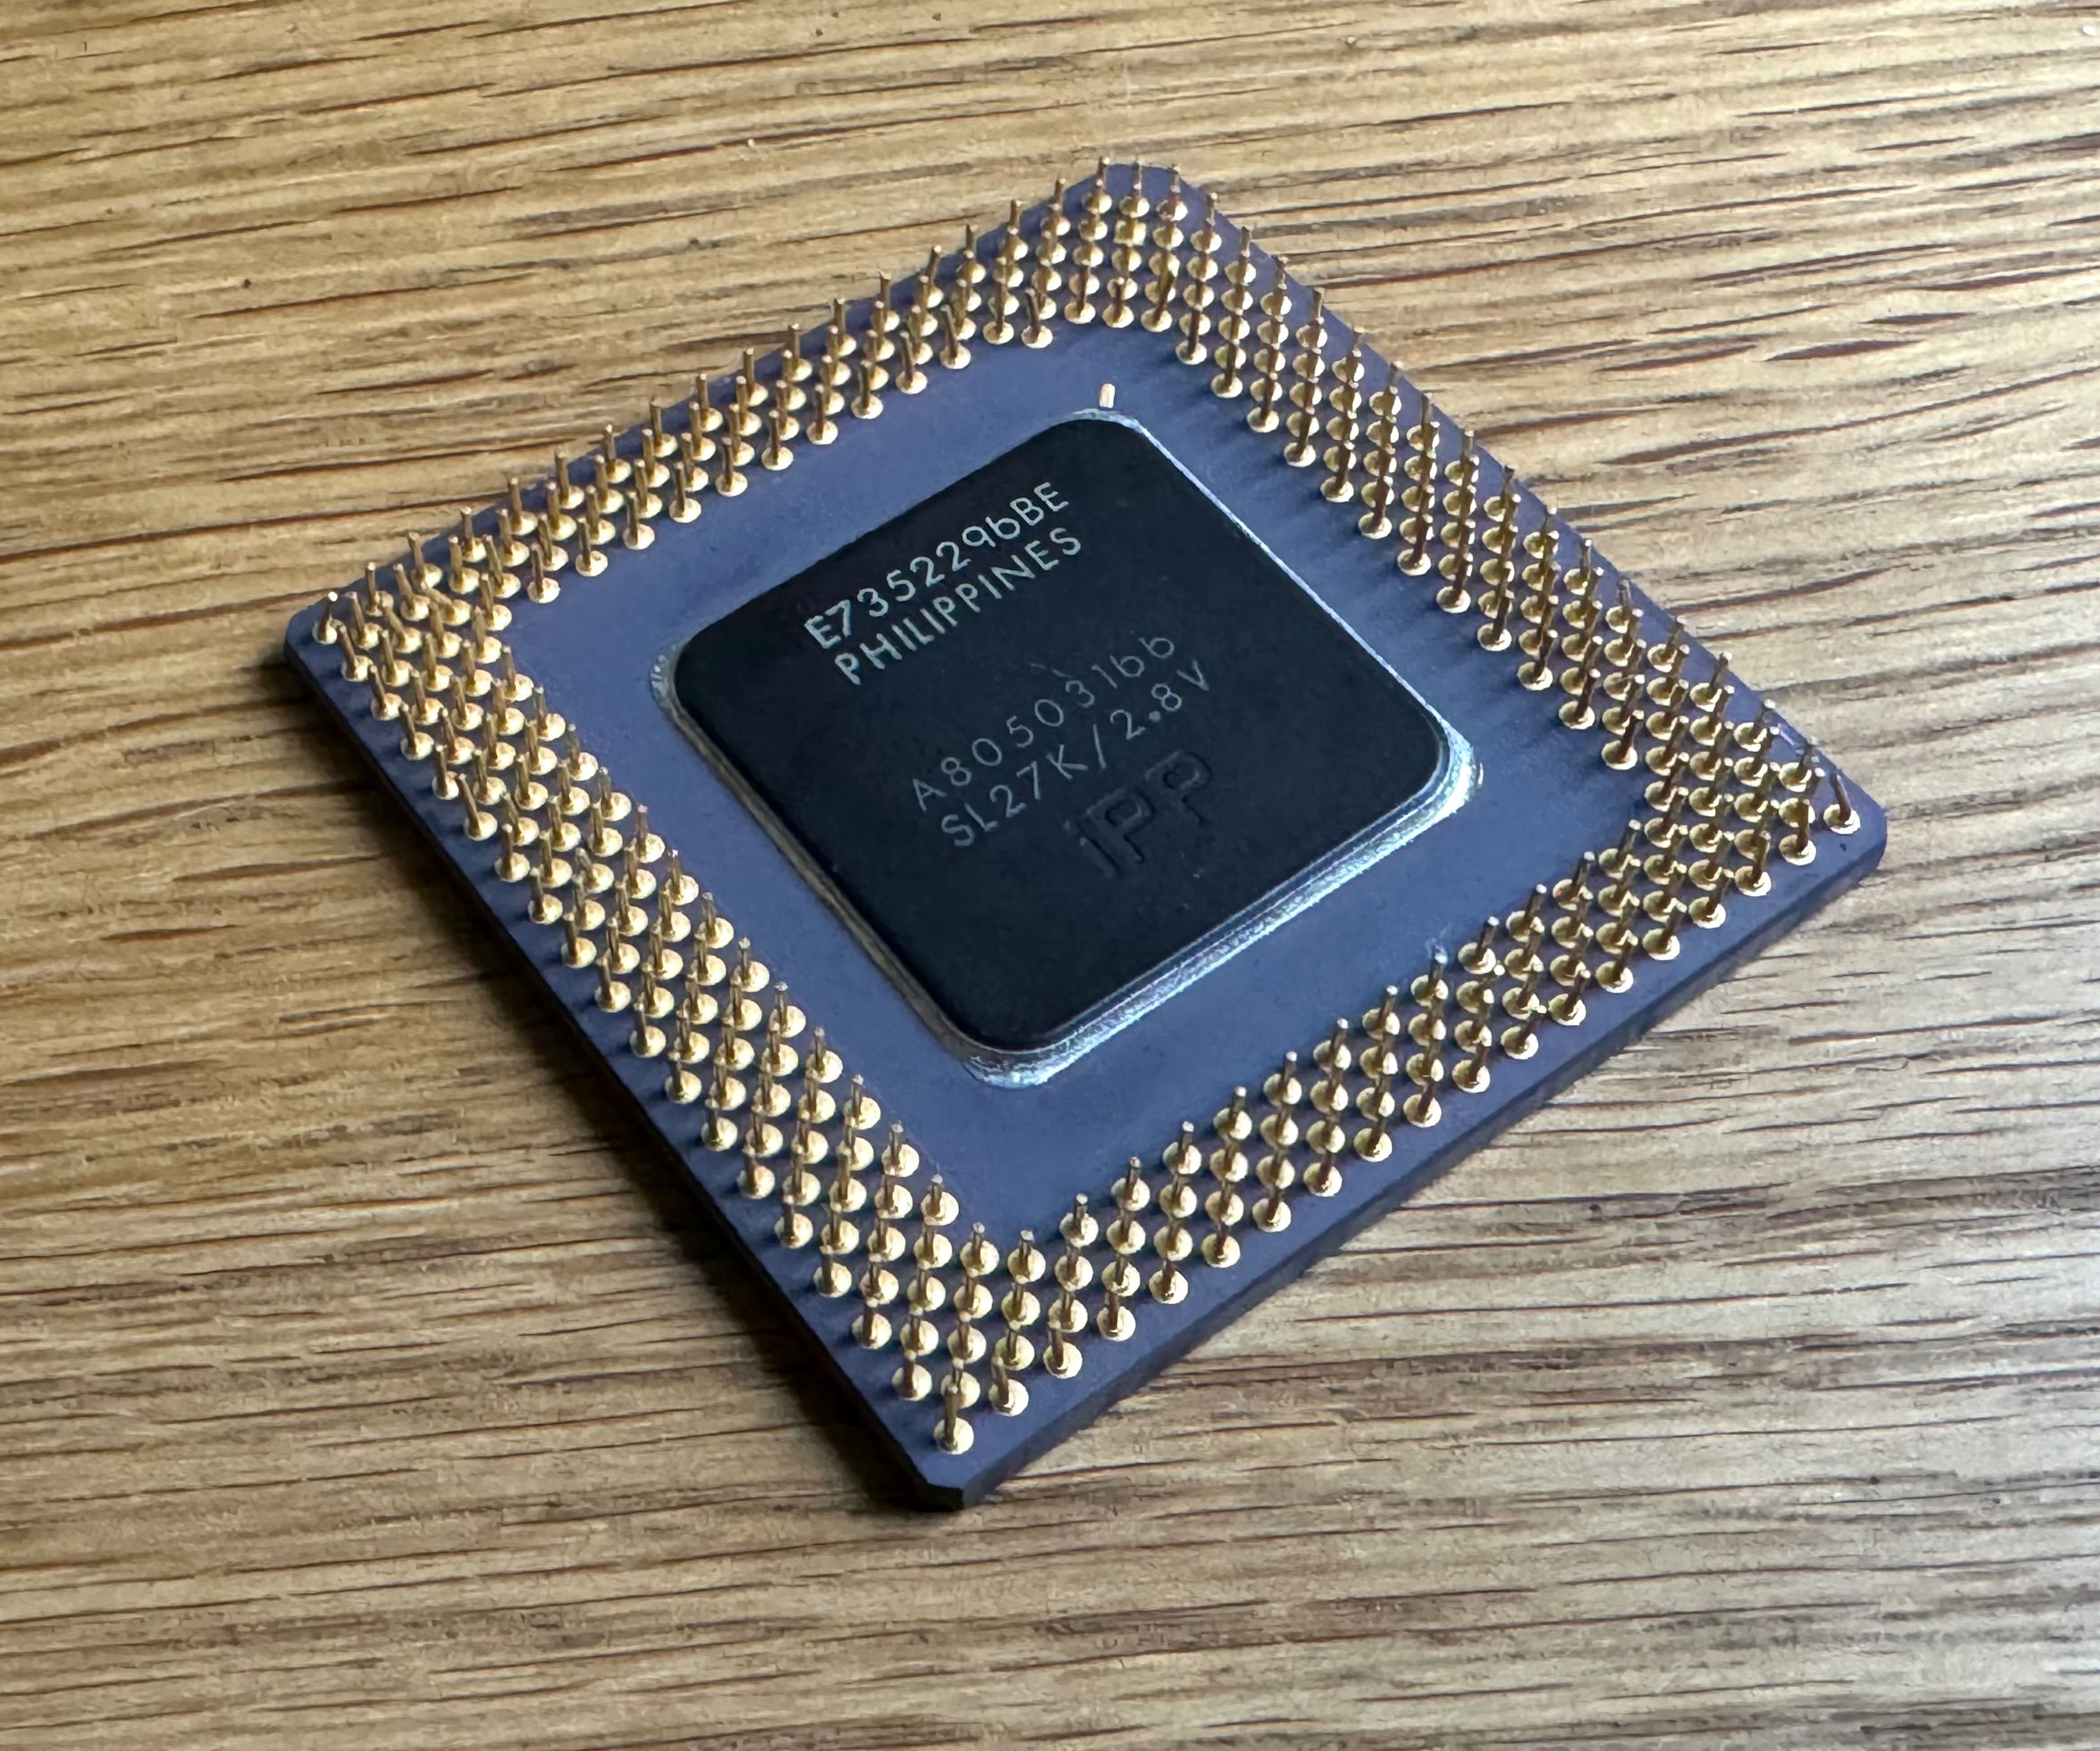 Procesor Intel Pentium MMX 166Mhz